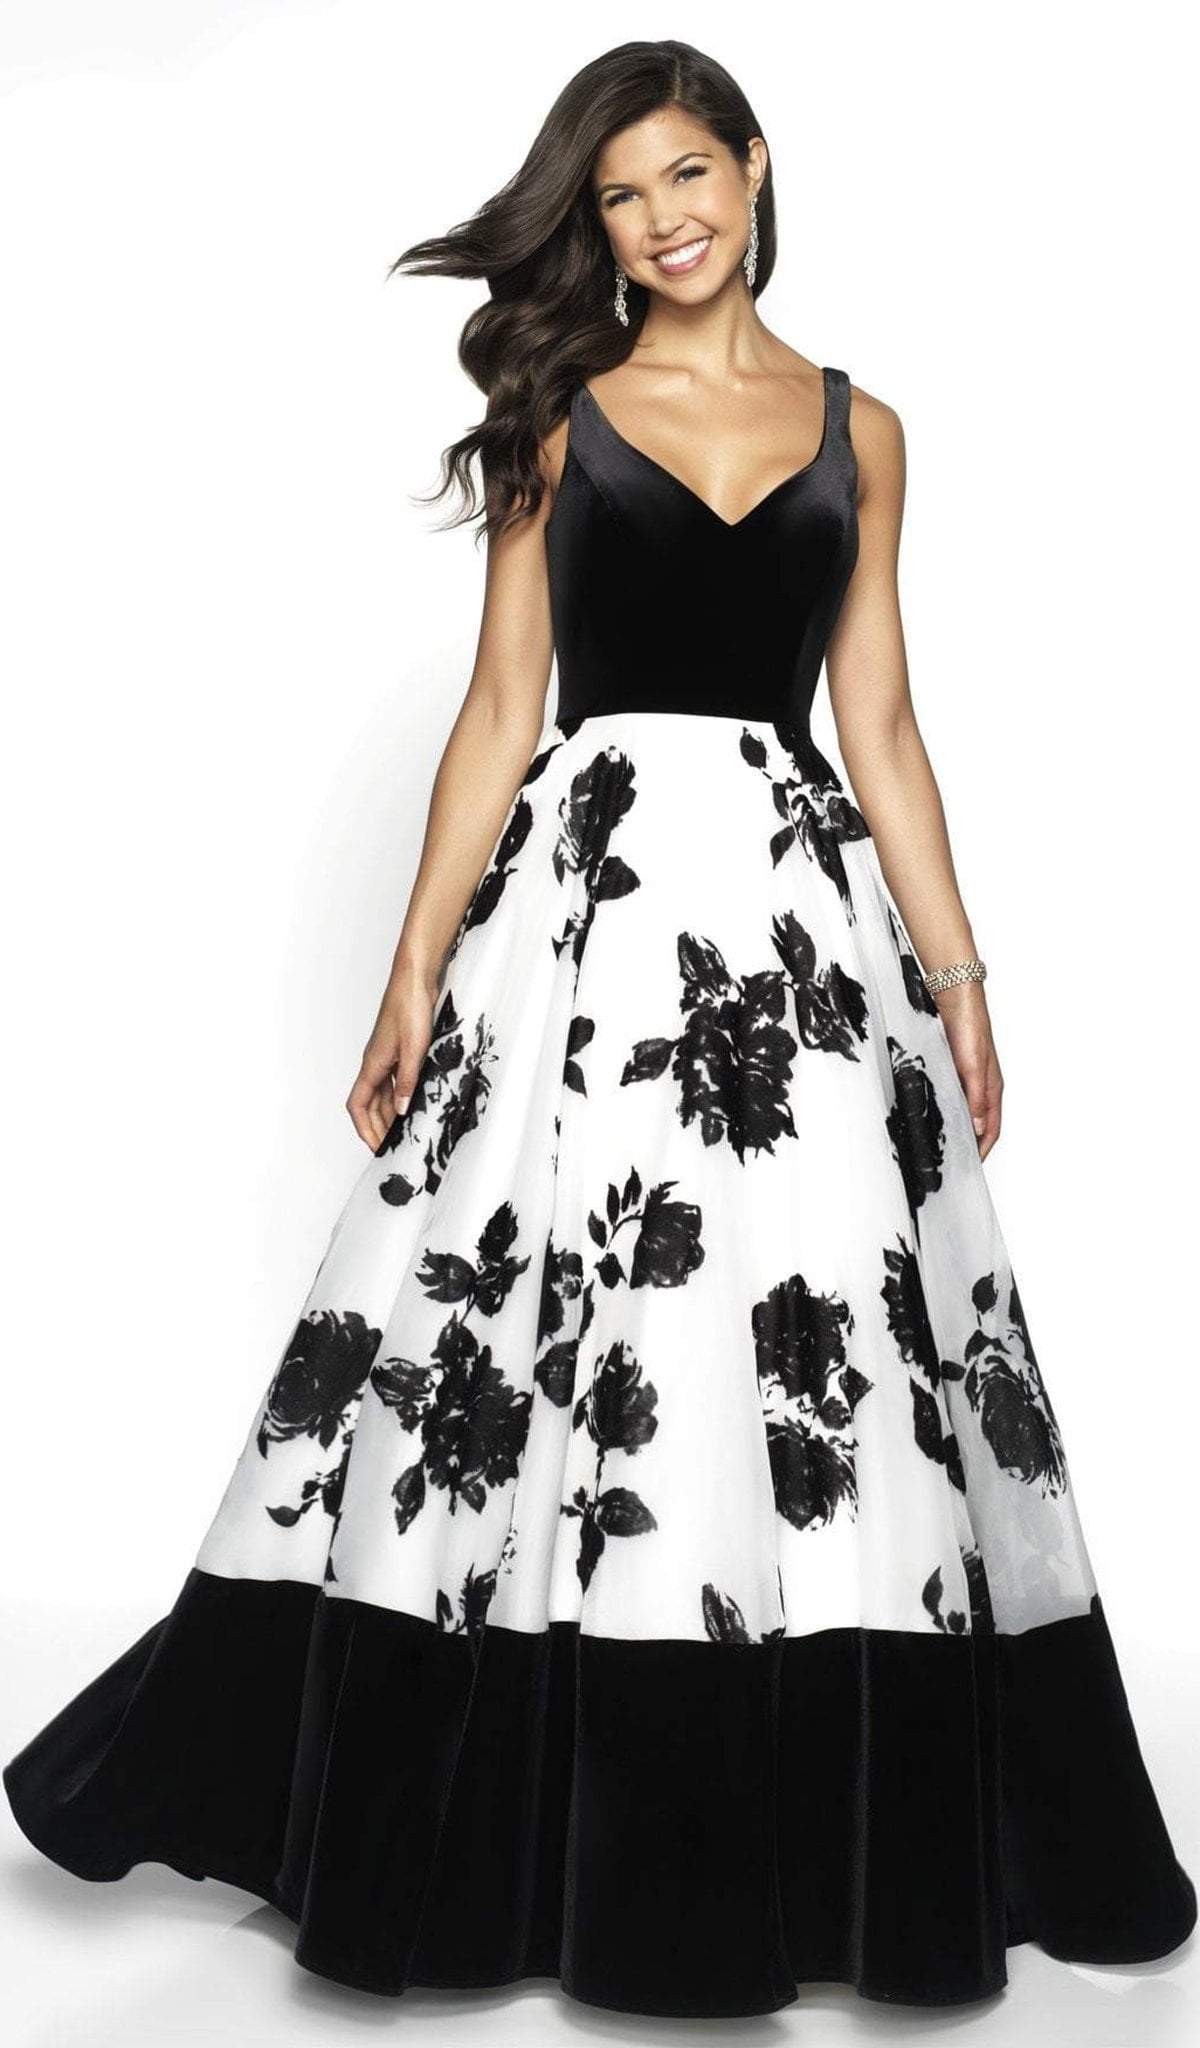 Blush by Alexia Designs - 5725 V-Neck Floral A-Line Dress Special Occasion Dress 0 / Off White/Black